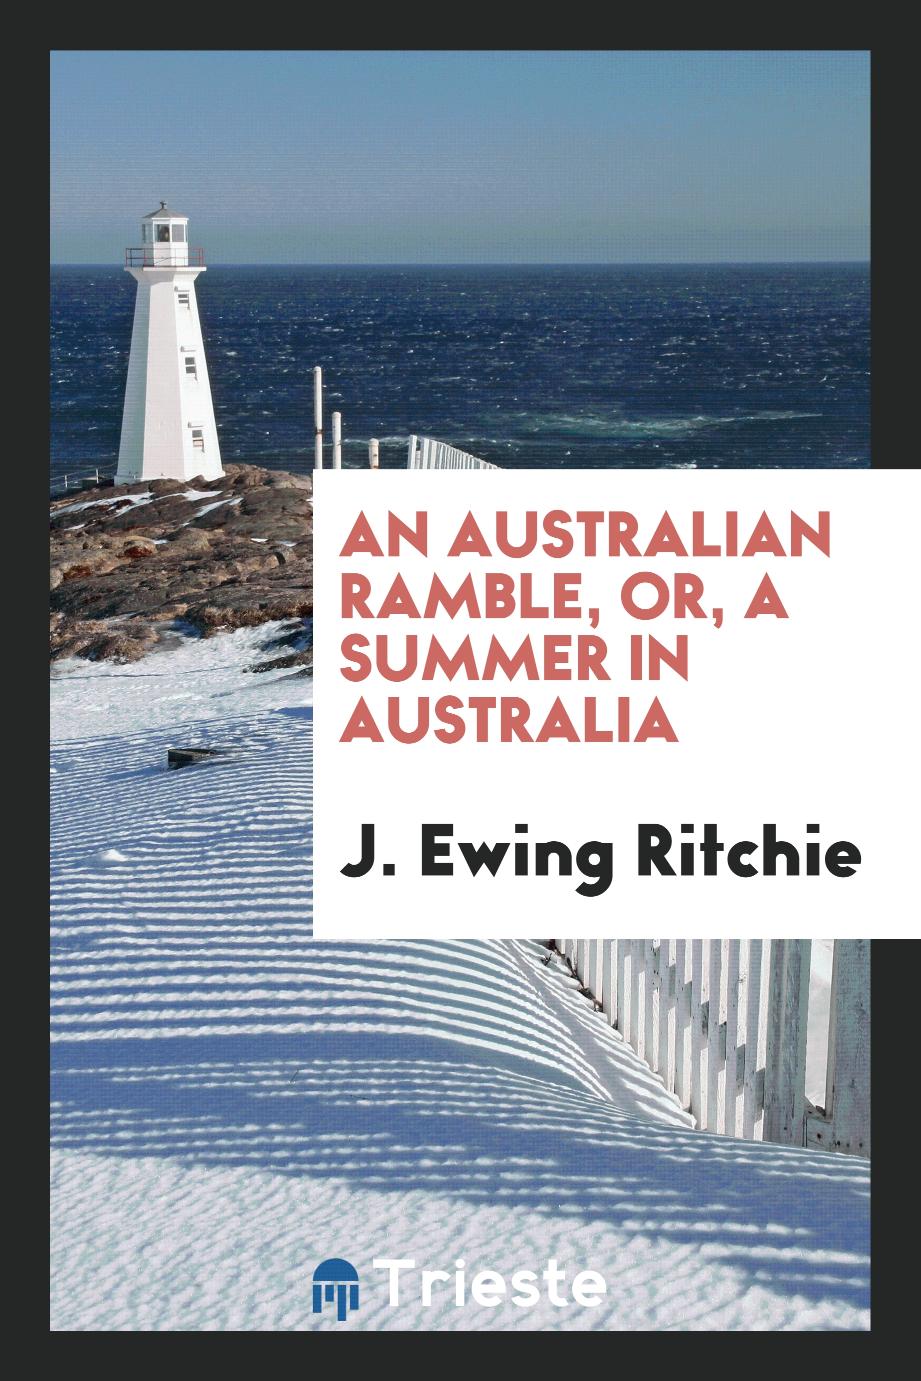 An Australian ramble, or, a summer in Australia